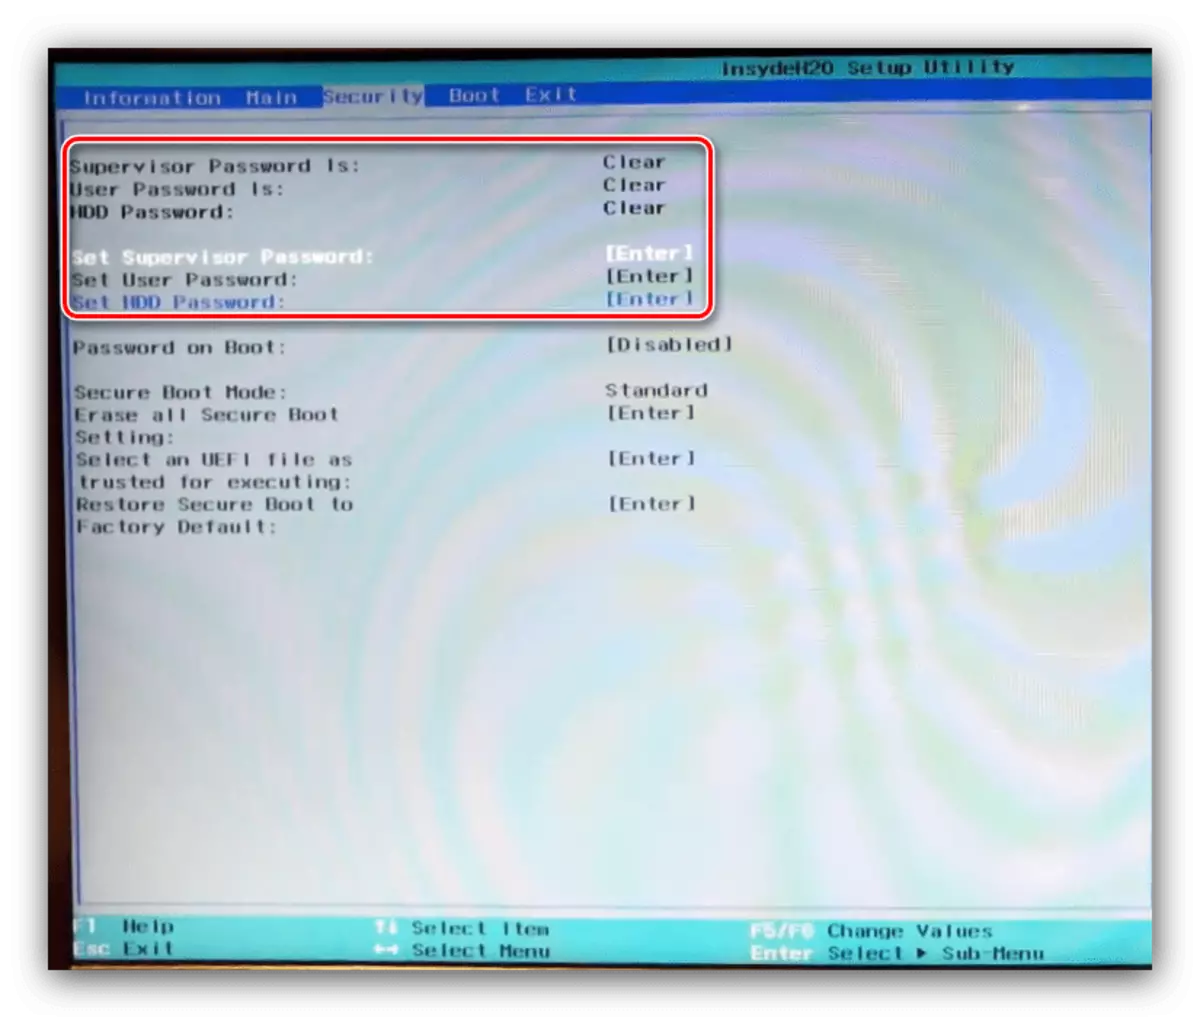 Pasvorto-Agordoj sur la Acer Laptop Bios Interface Security TAB